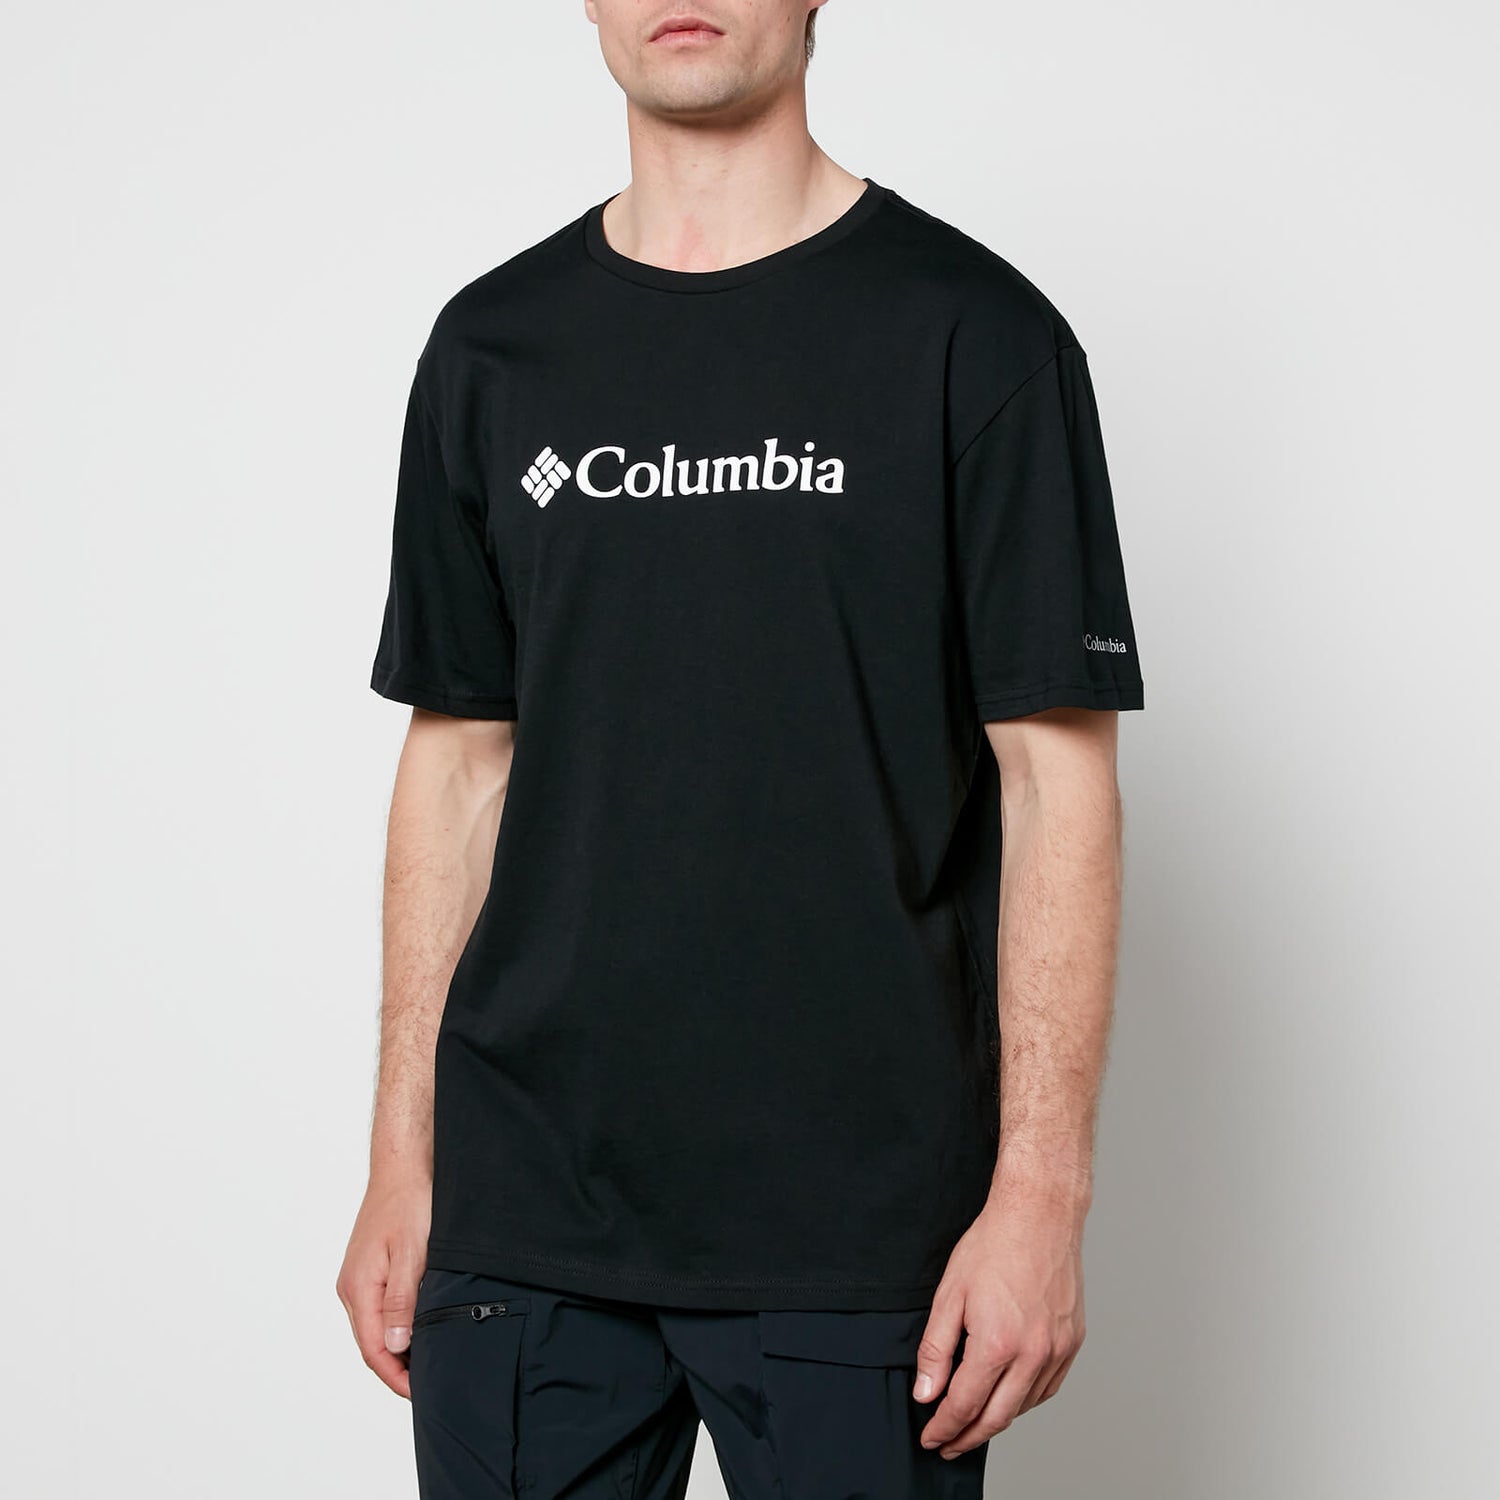 Columbia Men's Csc Basic Logo Short Sleeve T-Shirt - Black - S